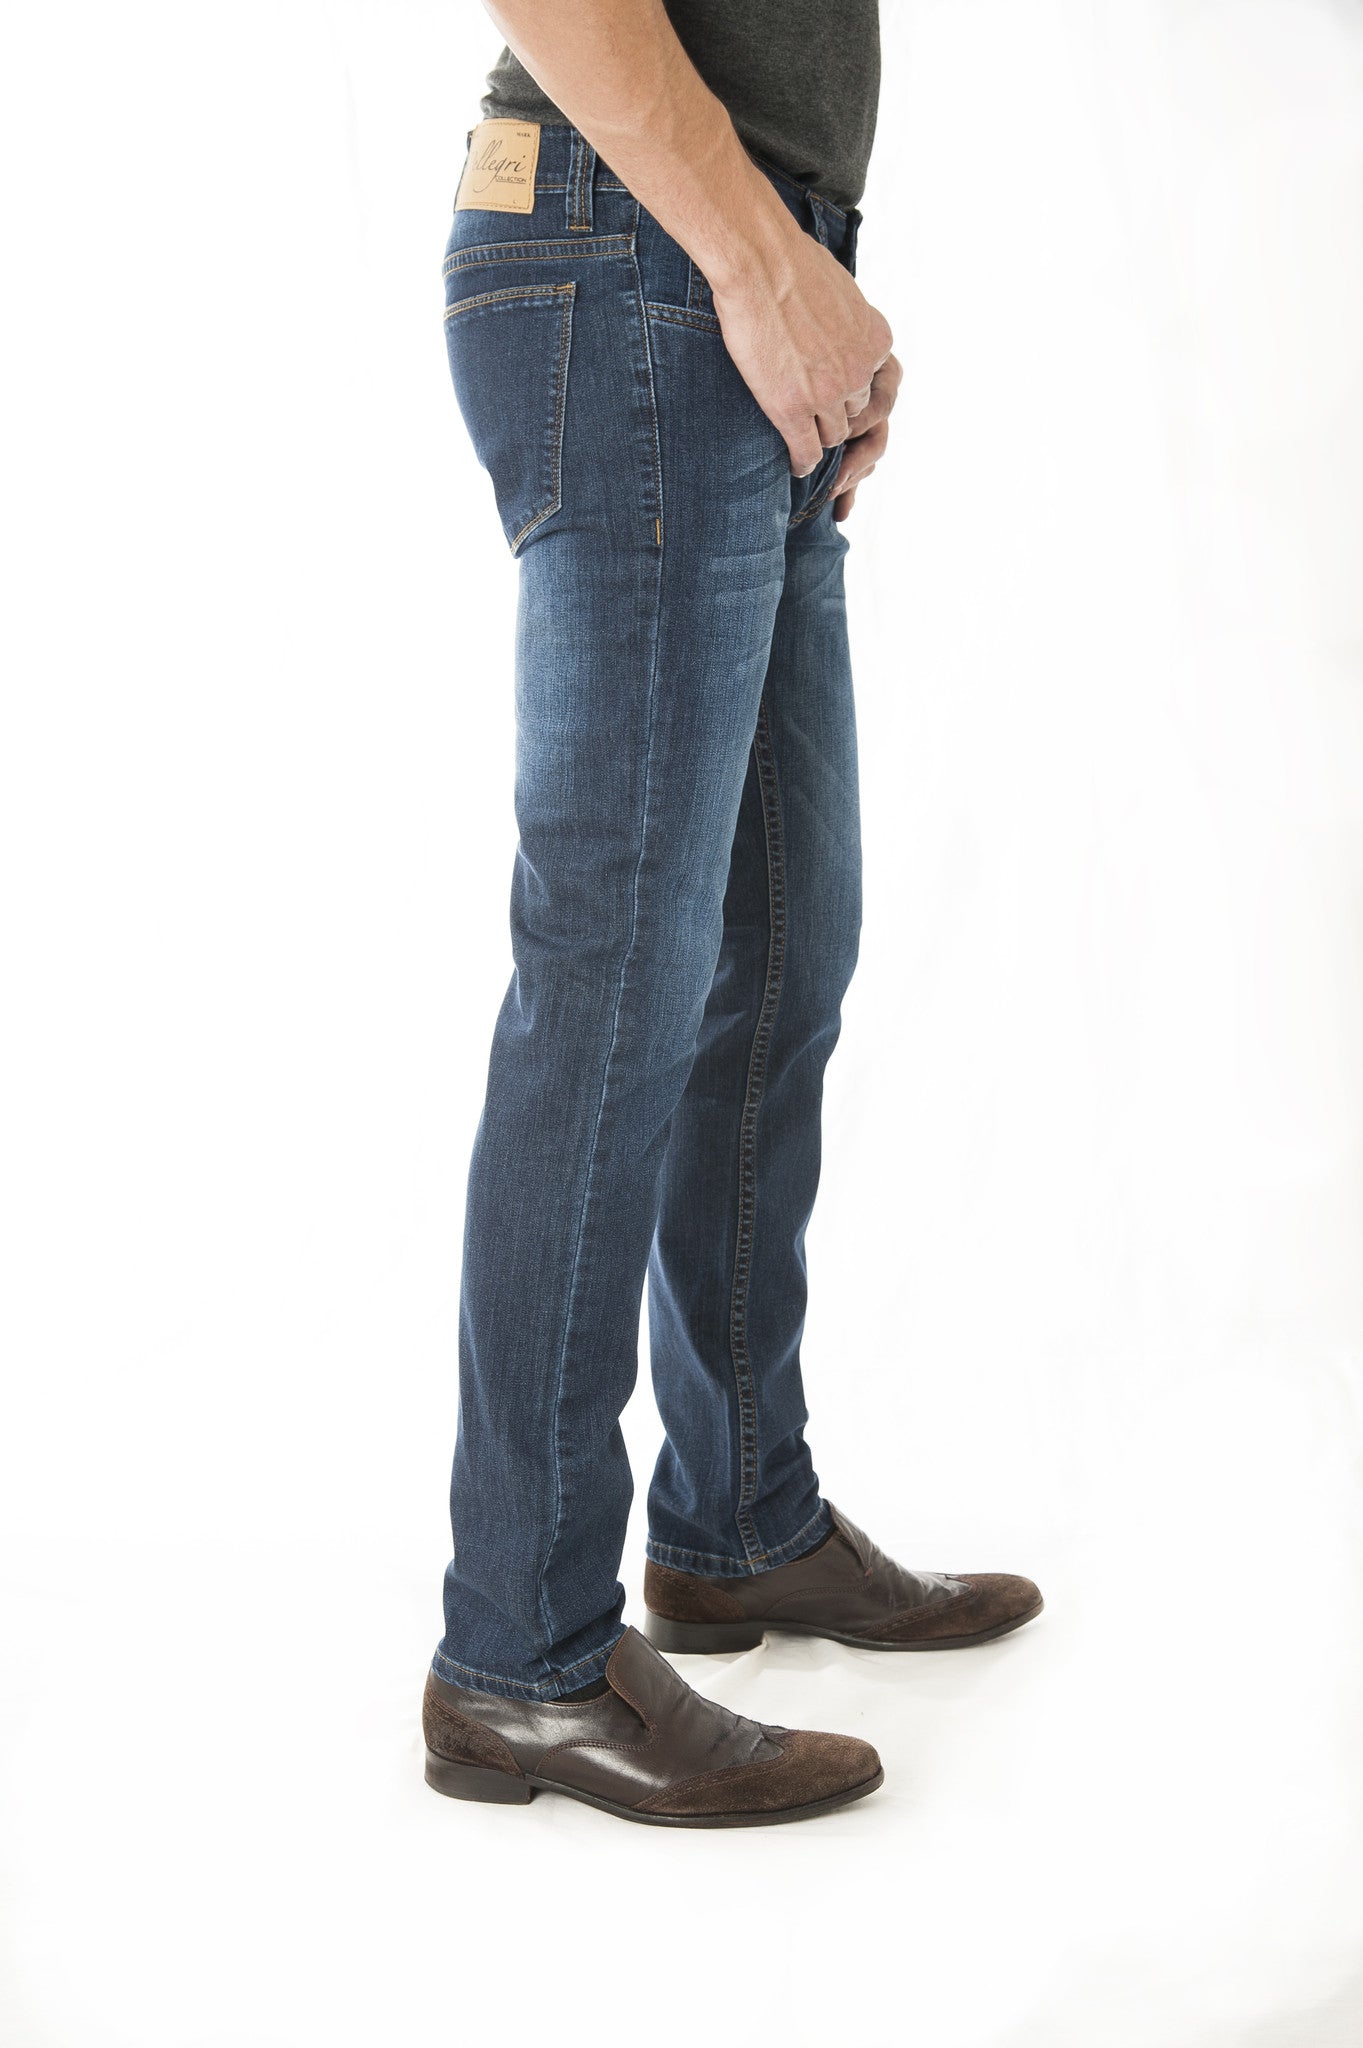 Pantalon Jeans Skinny Fit - Azul Escuro Cod: 200-2012